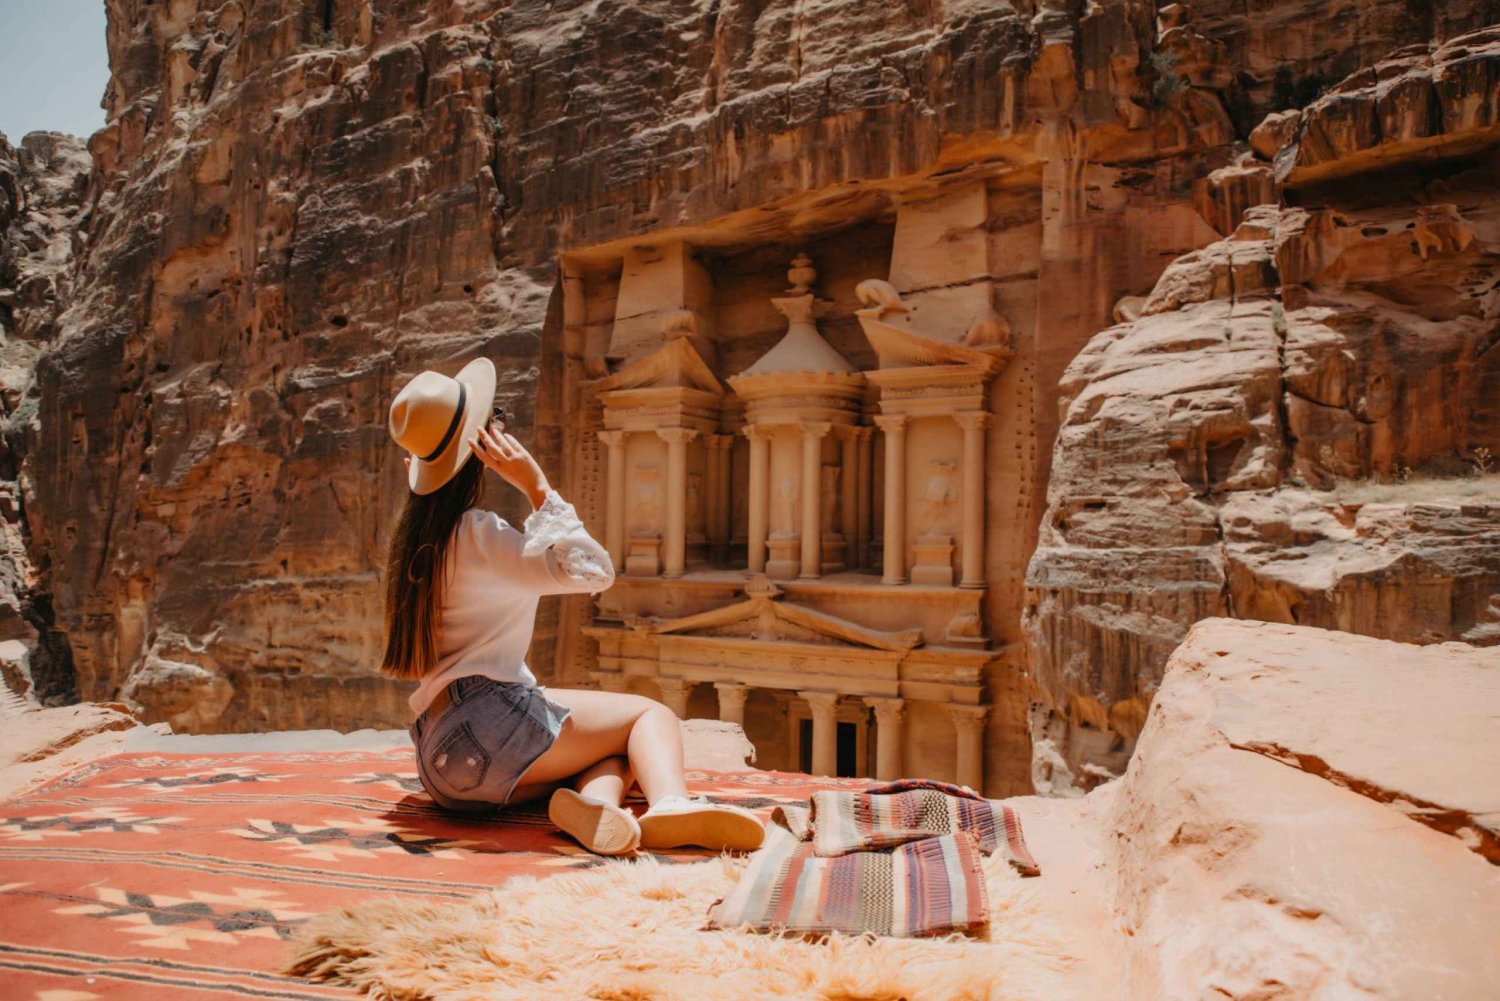 Petra & Jordanien Highlights 4-tägige Tour ab Tel Aviv/Jerusalem